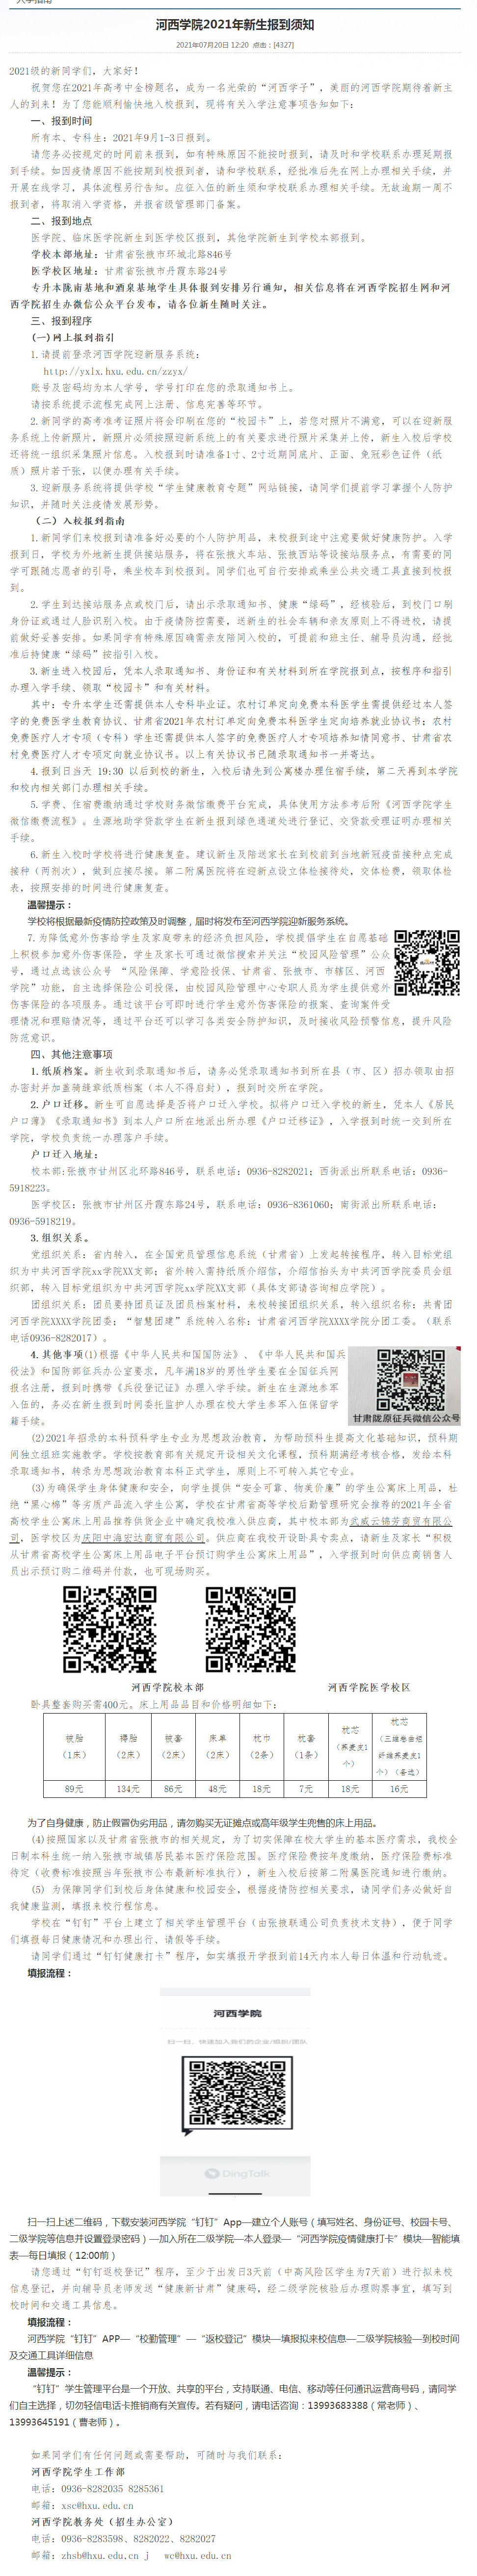 FireShot Capture 059 - 河西学院2021年新生报到须知-河西学院-招生网 - zsw.hxu.edu.cn.jpg